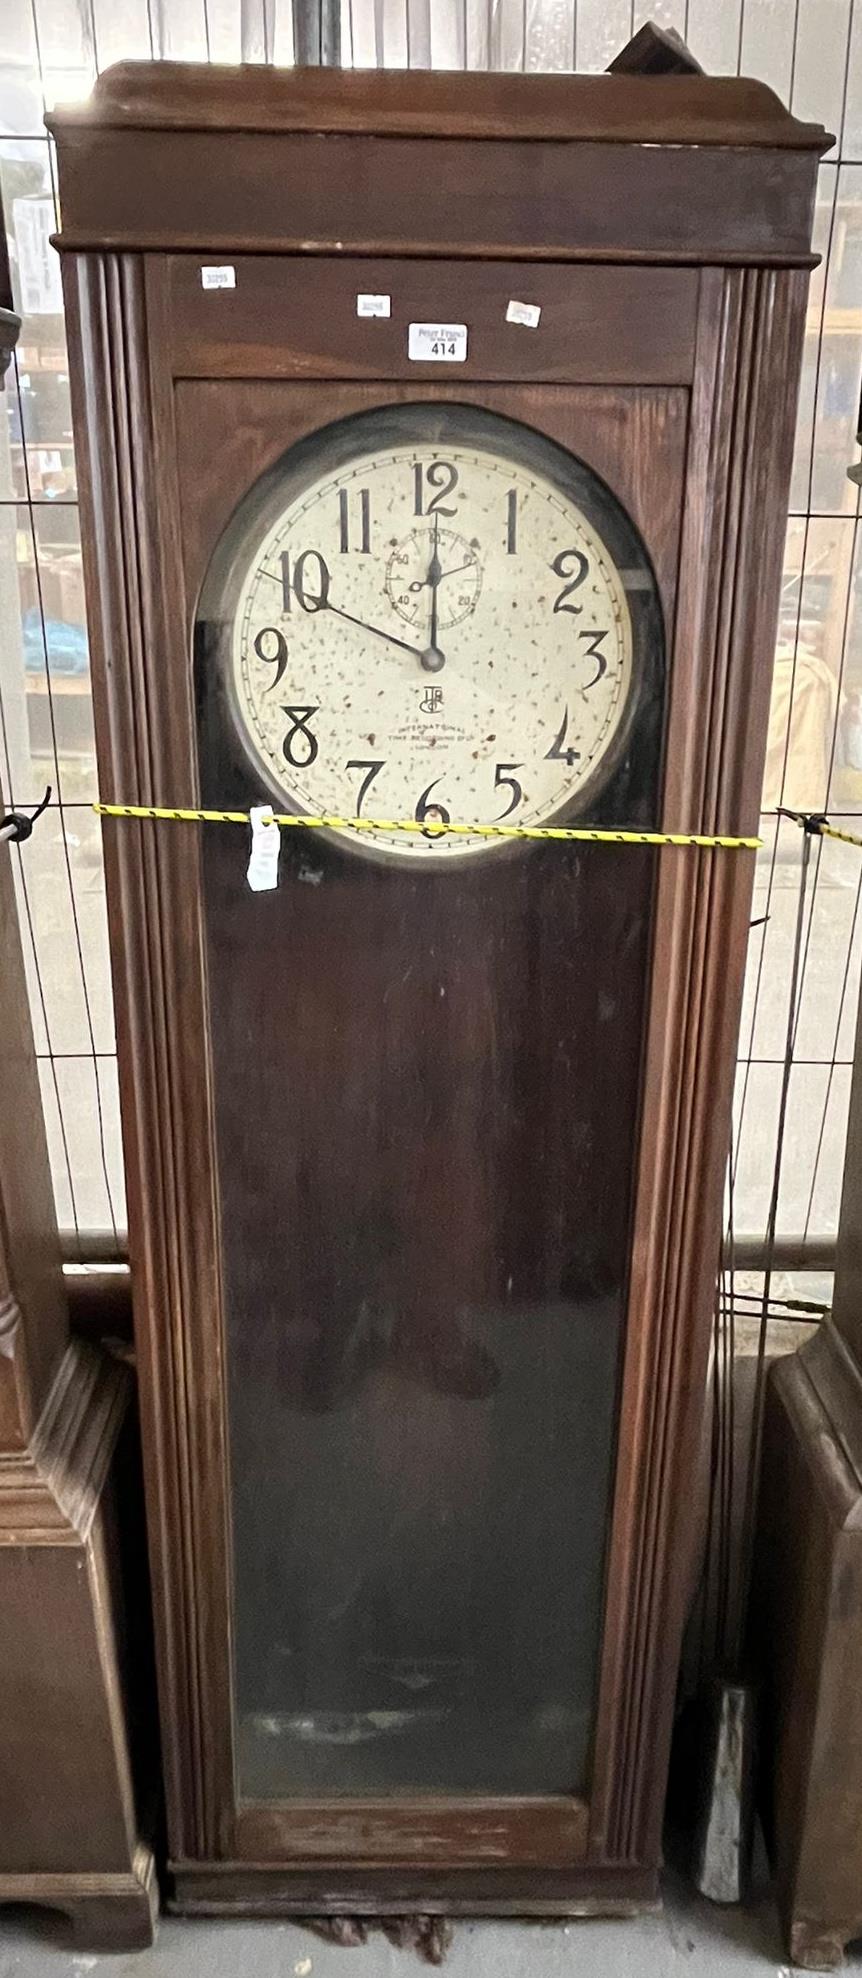 Large international Time Recording Co. Ltd. industrial clock, distressed condition. (B.P. 21% + VAT)